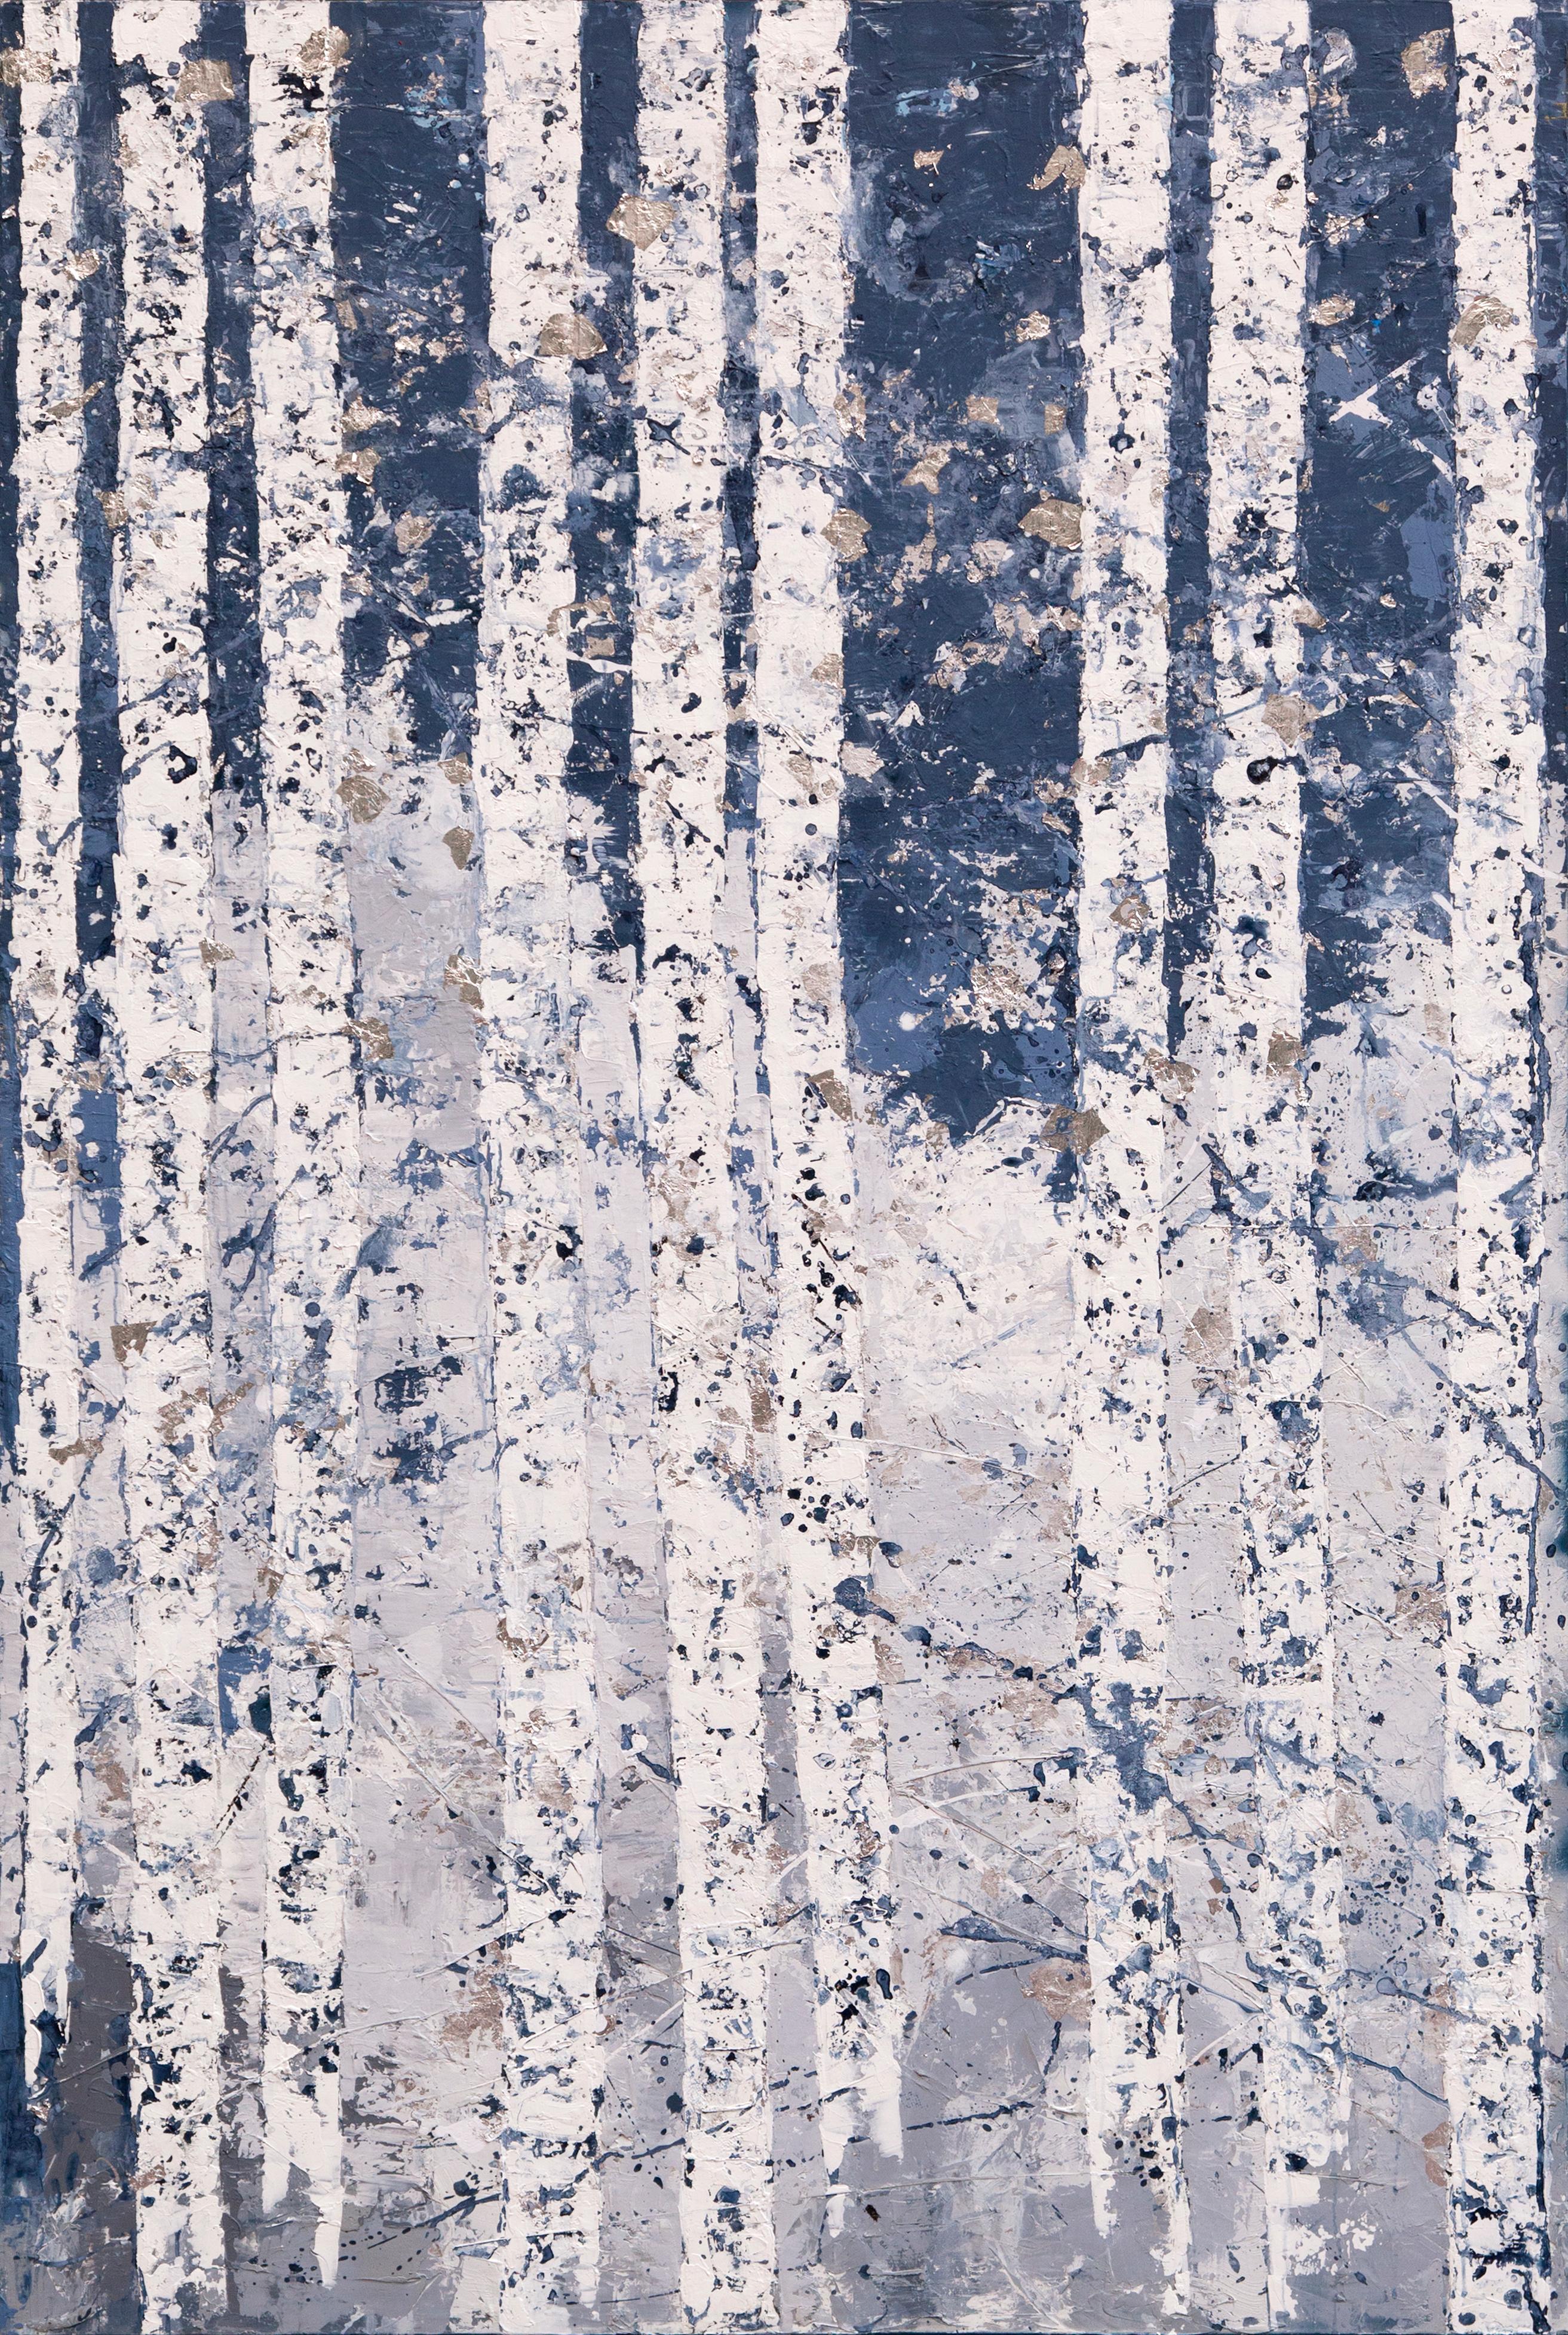 Winter Stillness VIII - 21st Cent, Contemporary, Abstract Painting, Mixed Media  - Mixed Media Art by Chelsea Davine